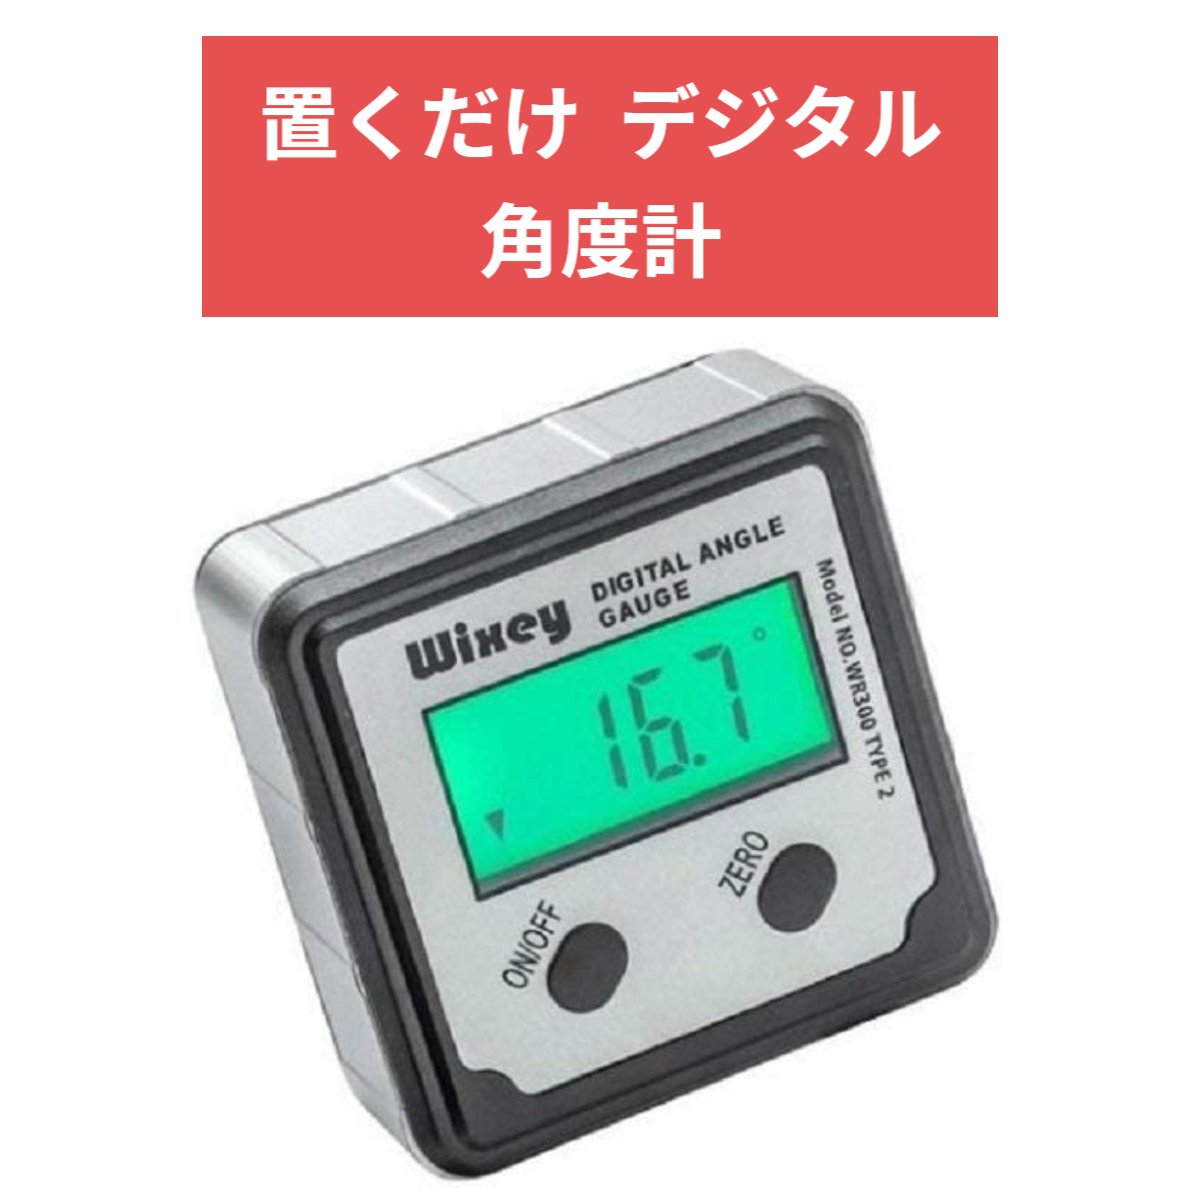 Wixey デジタル 角度計 WR300 type2 バックライト 単４電池式コンパクト 計測器 測量 DIY 工具 角度が簡単に測れる